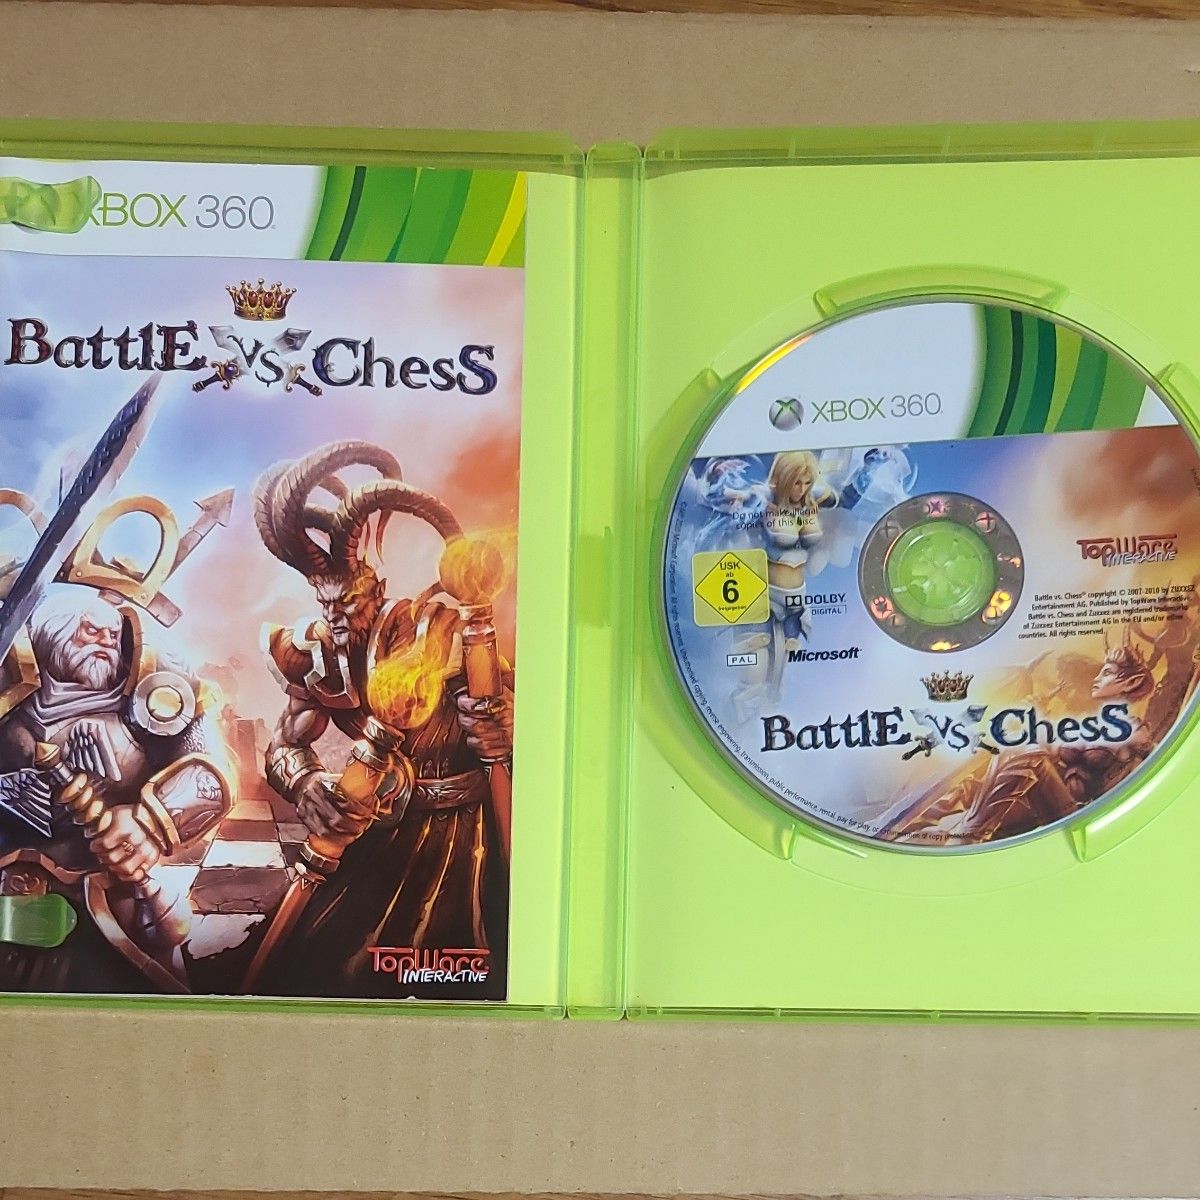 Xbox360 Battle vs. Chess  EU版 海外版